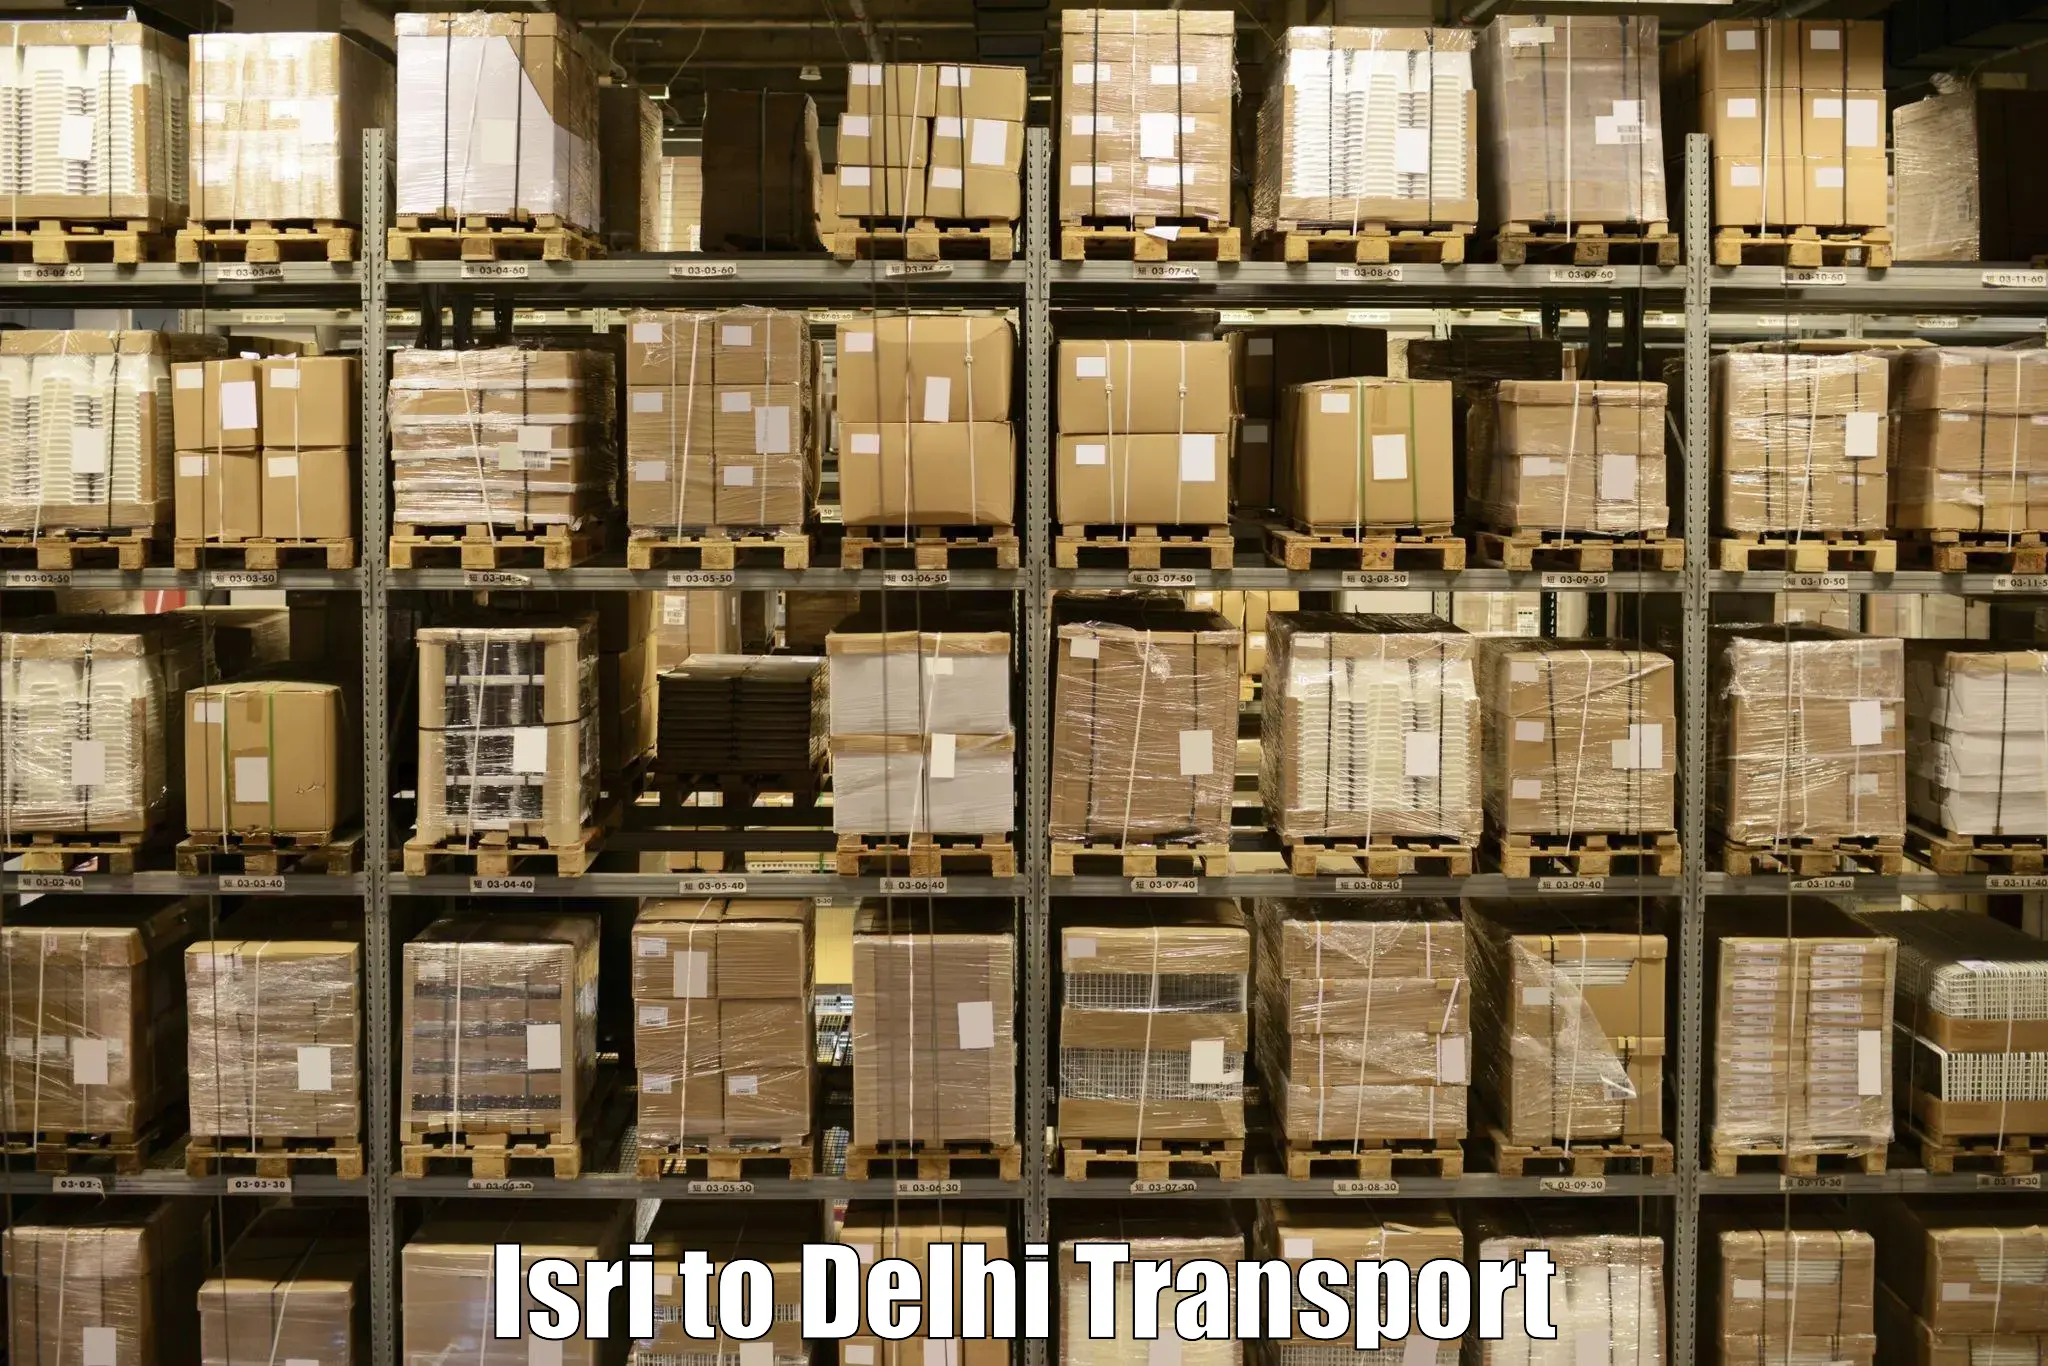 Sending bike to another city Isri to Delhi